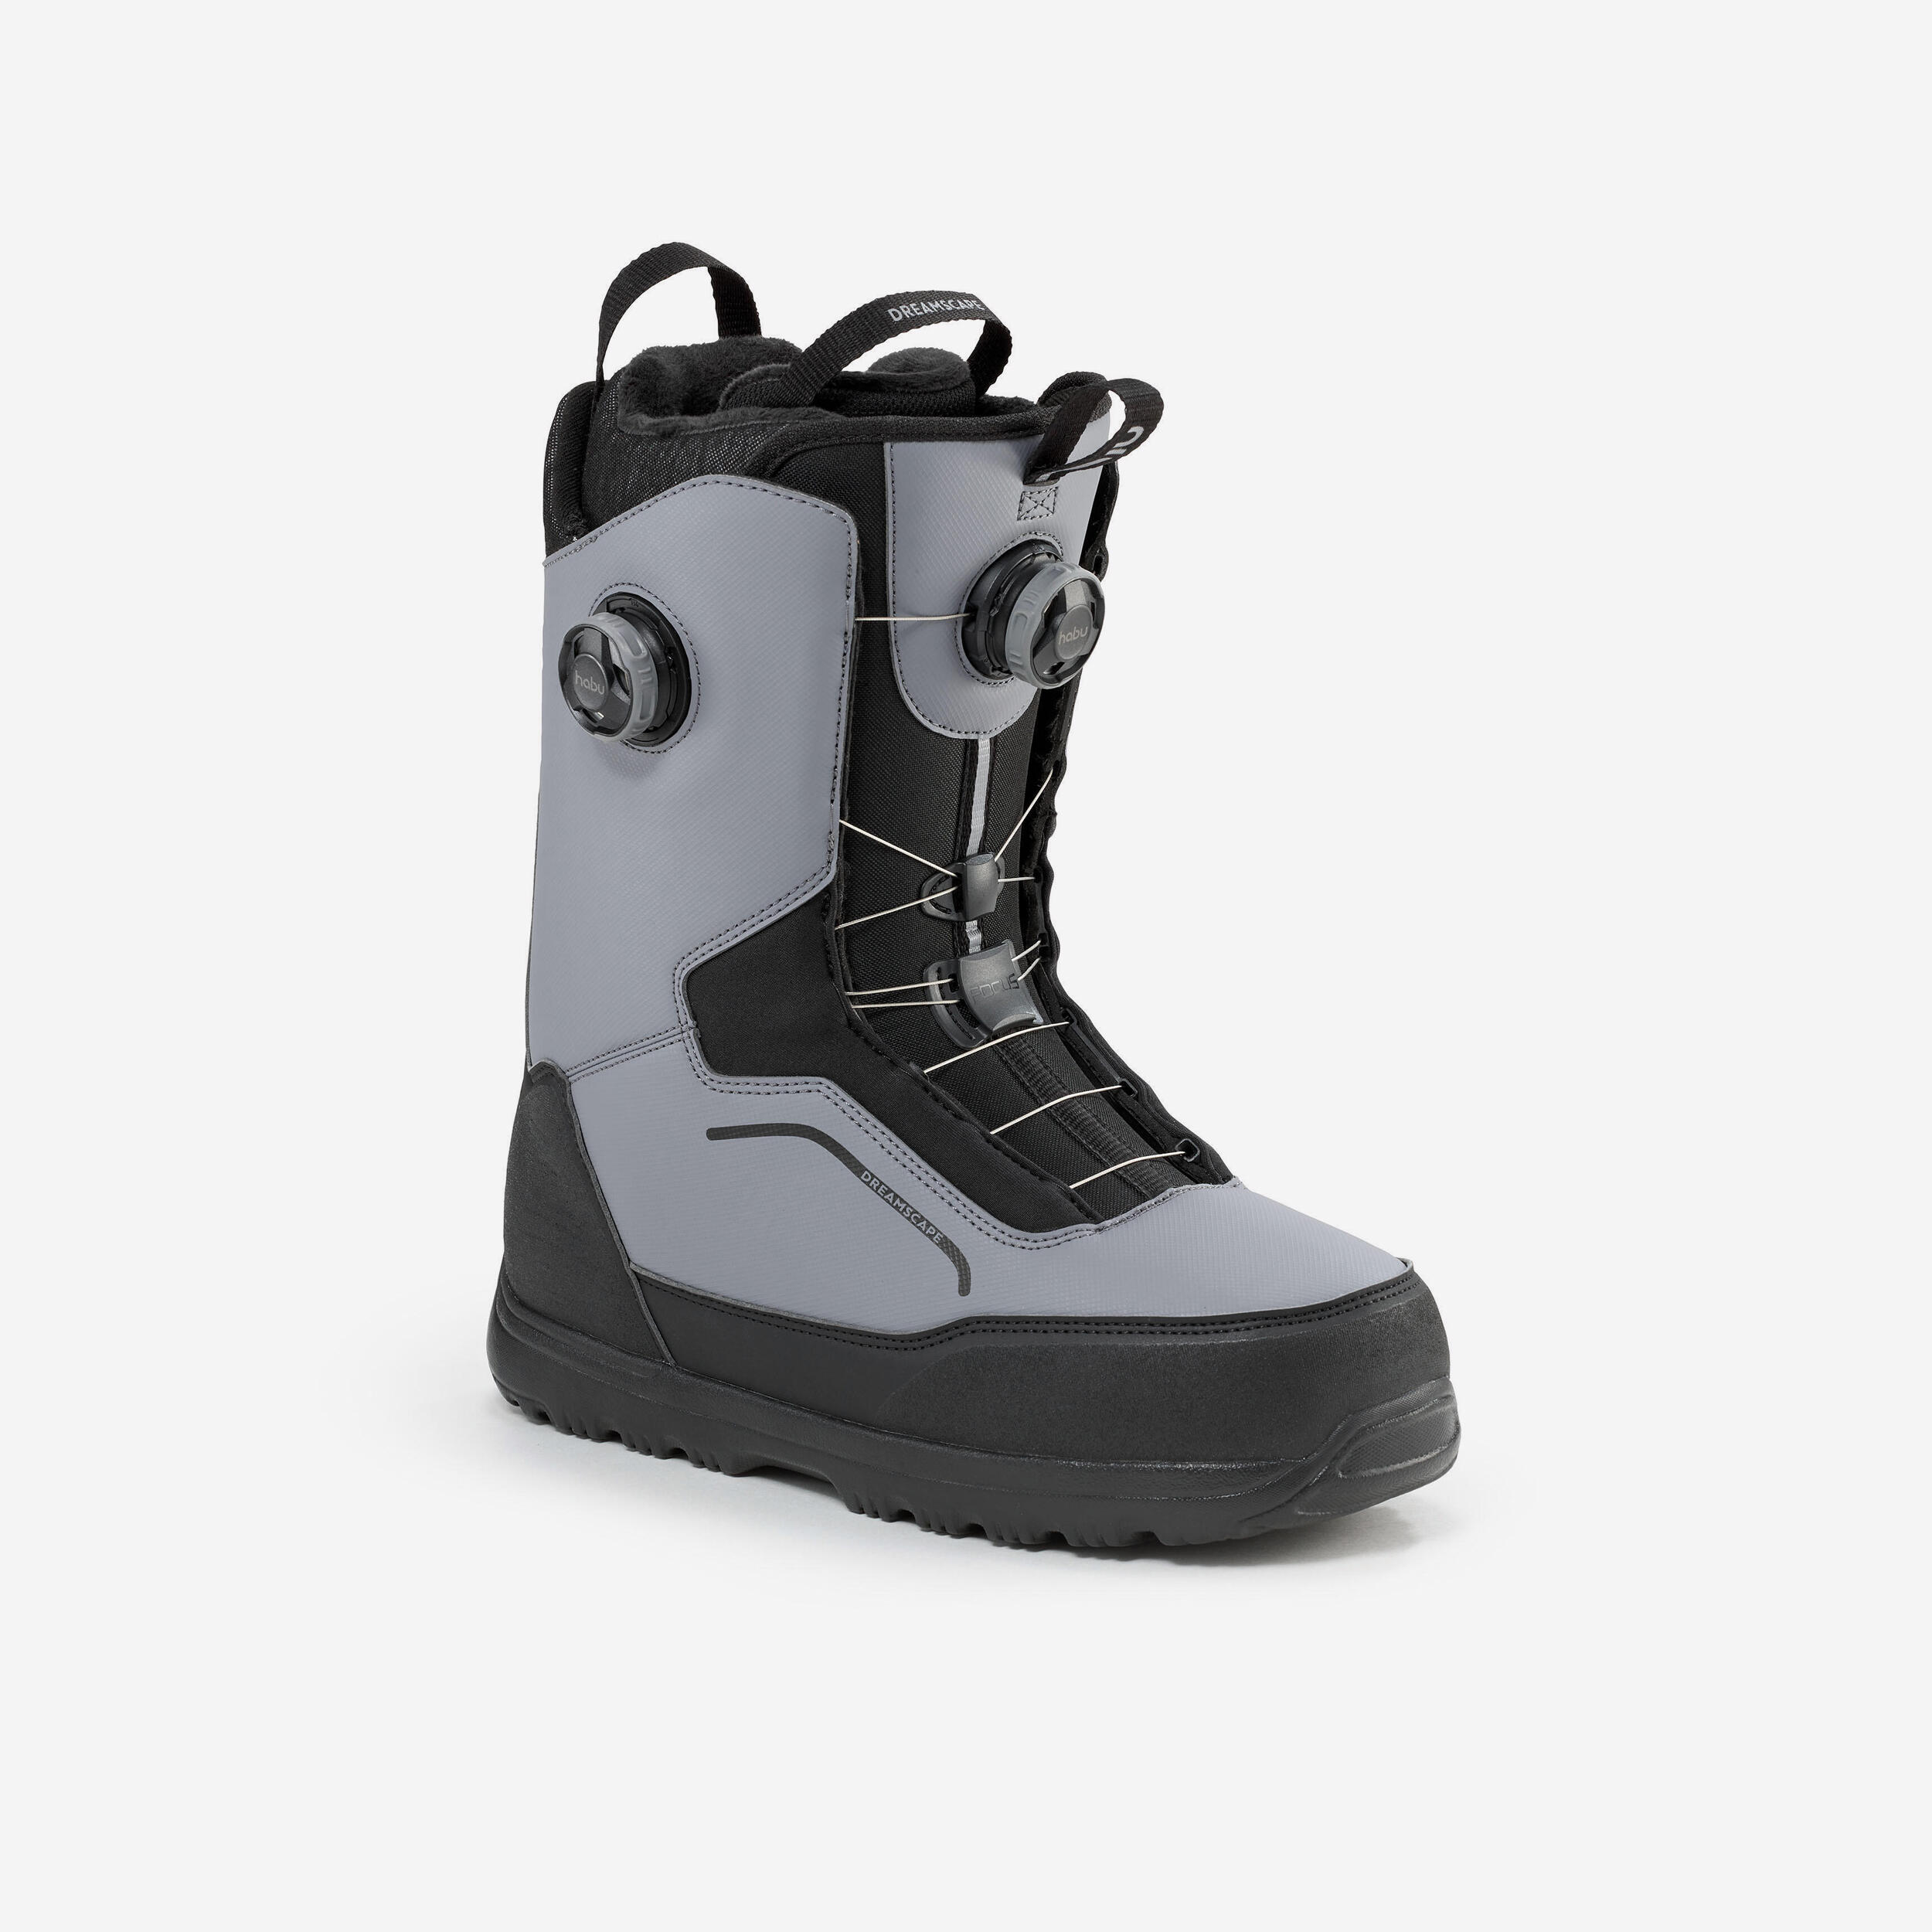 DREAMSCAPE Double wheel snowboard boots, rigid flex - Allroad 900 Grey